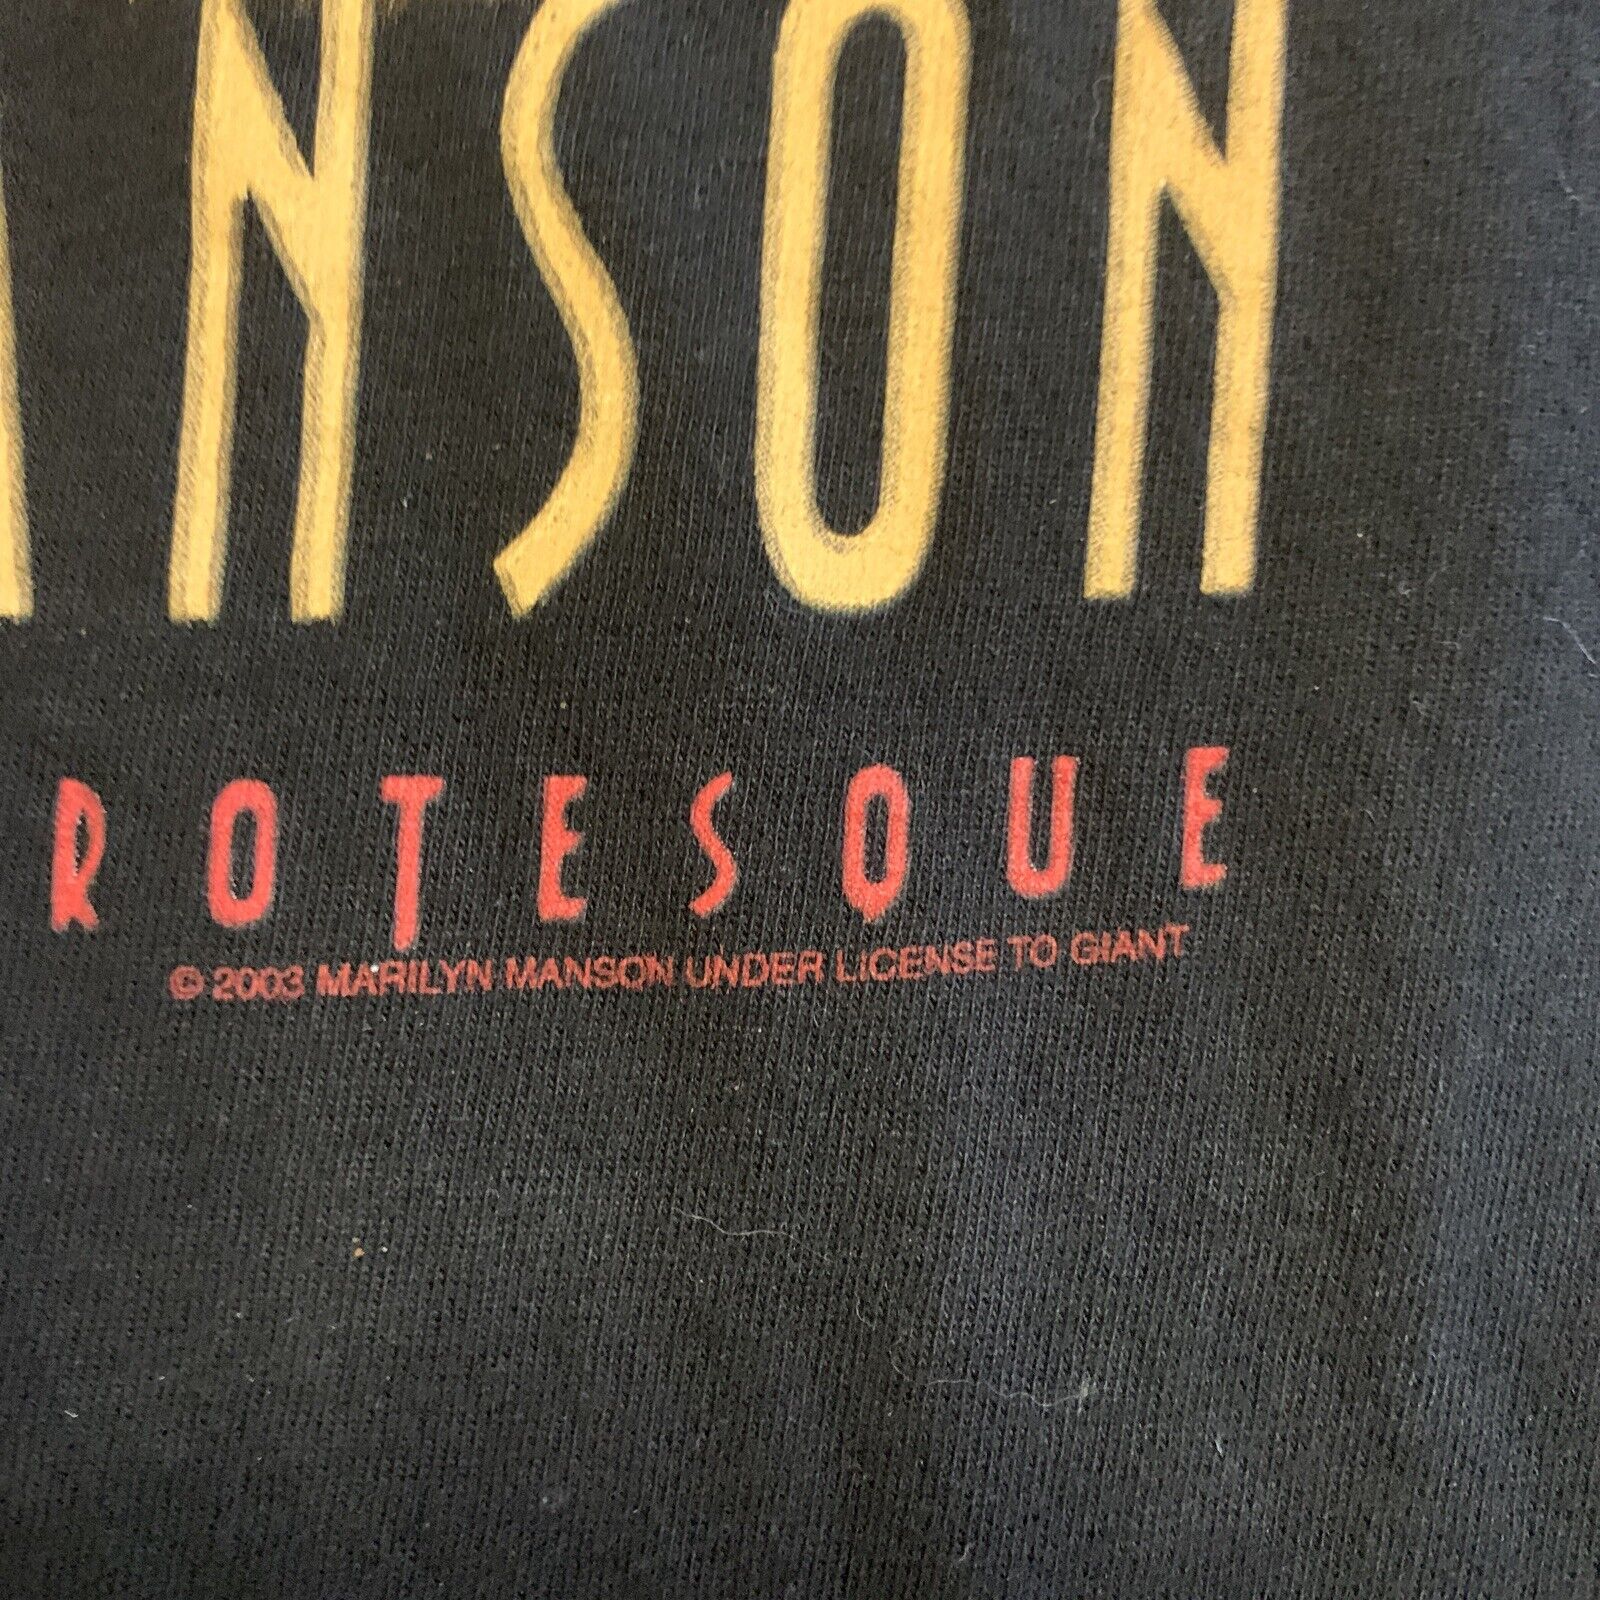 Vintage Marilyn Manson Tshirt | eBay